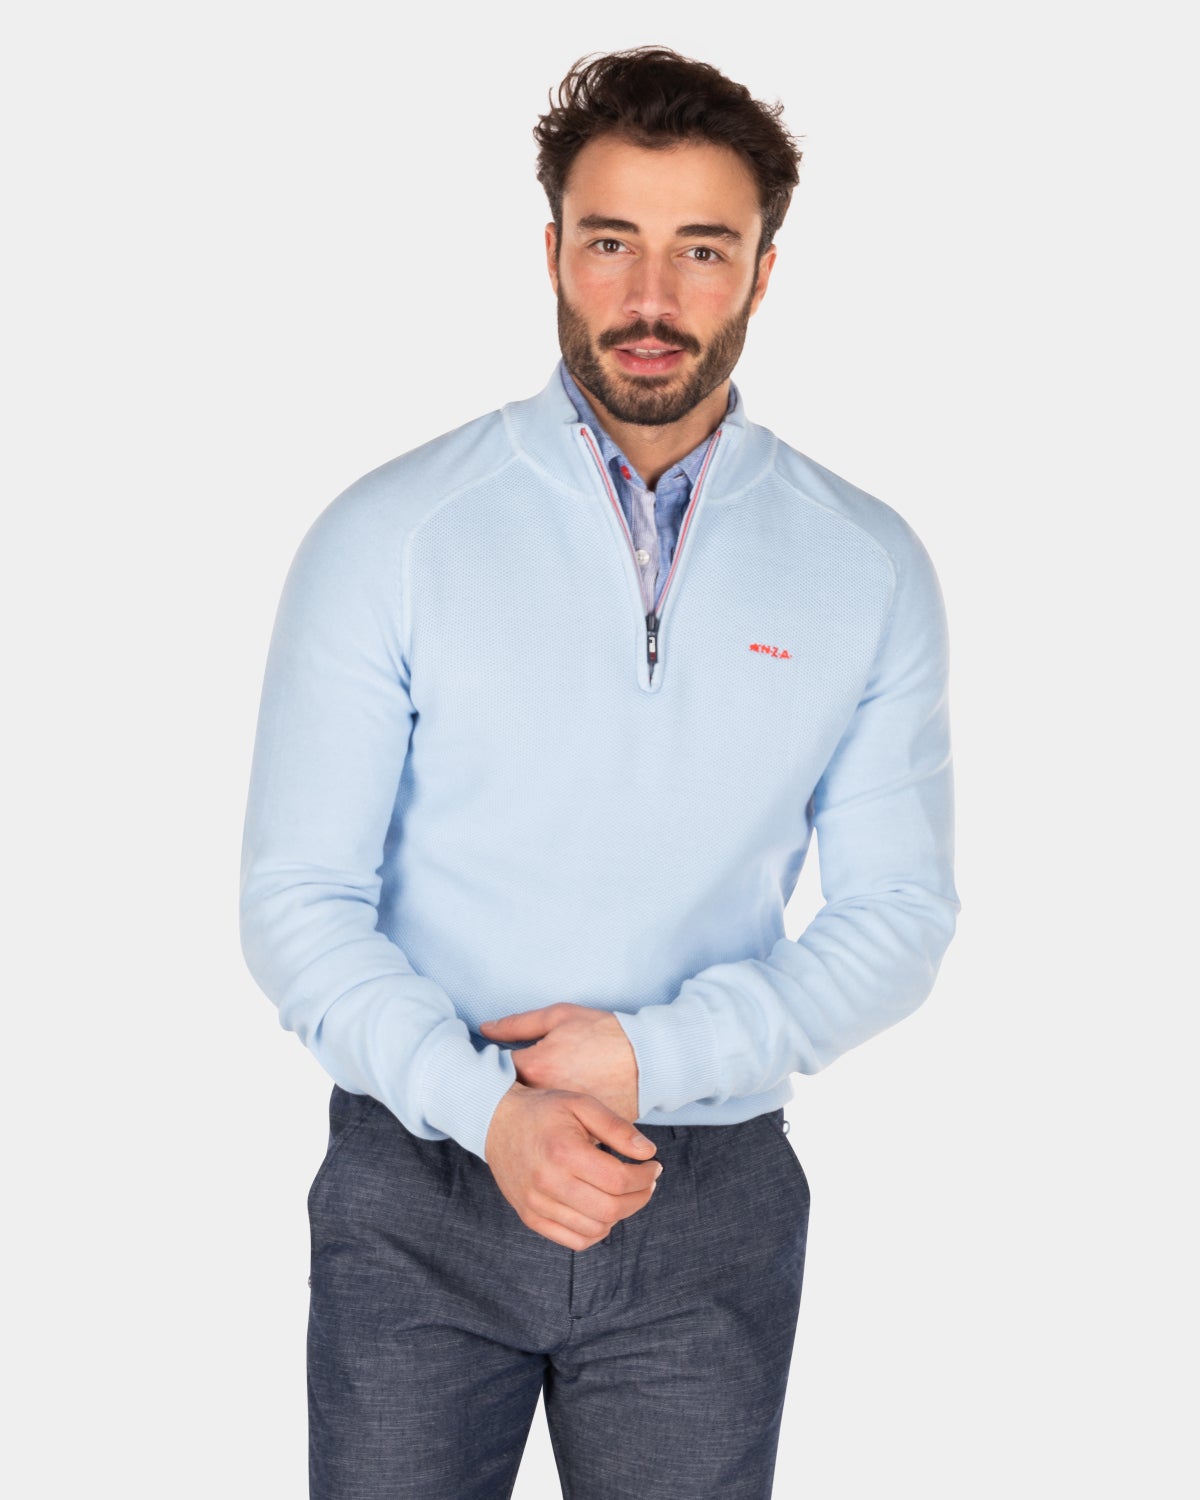 Solid coloured half zip jumper - Universal Blue